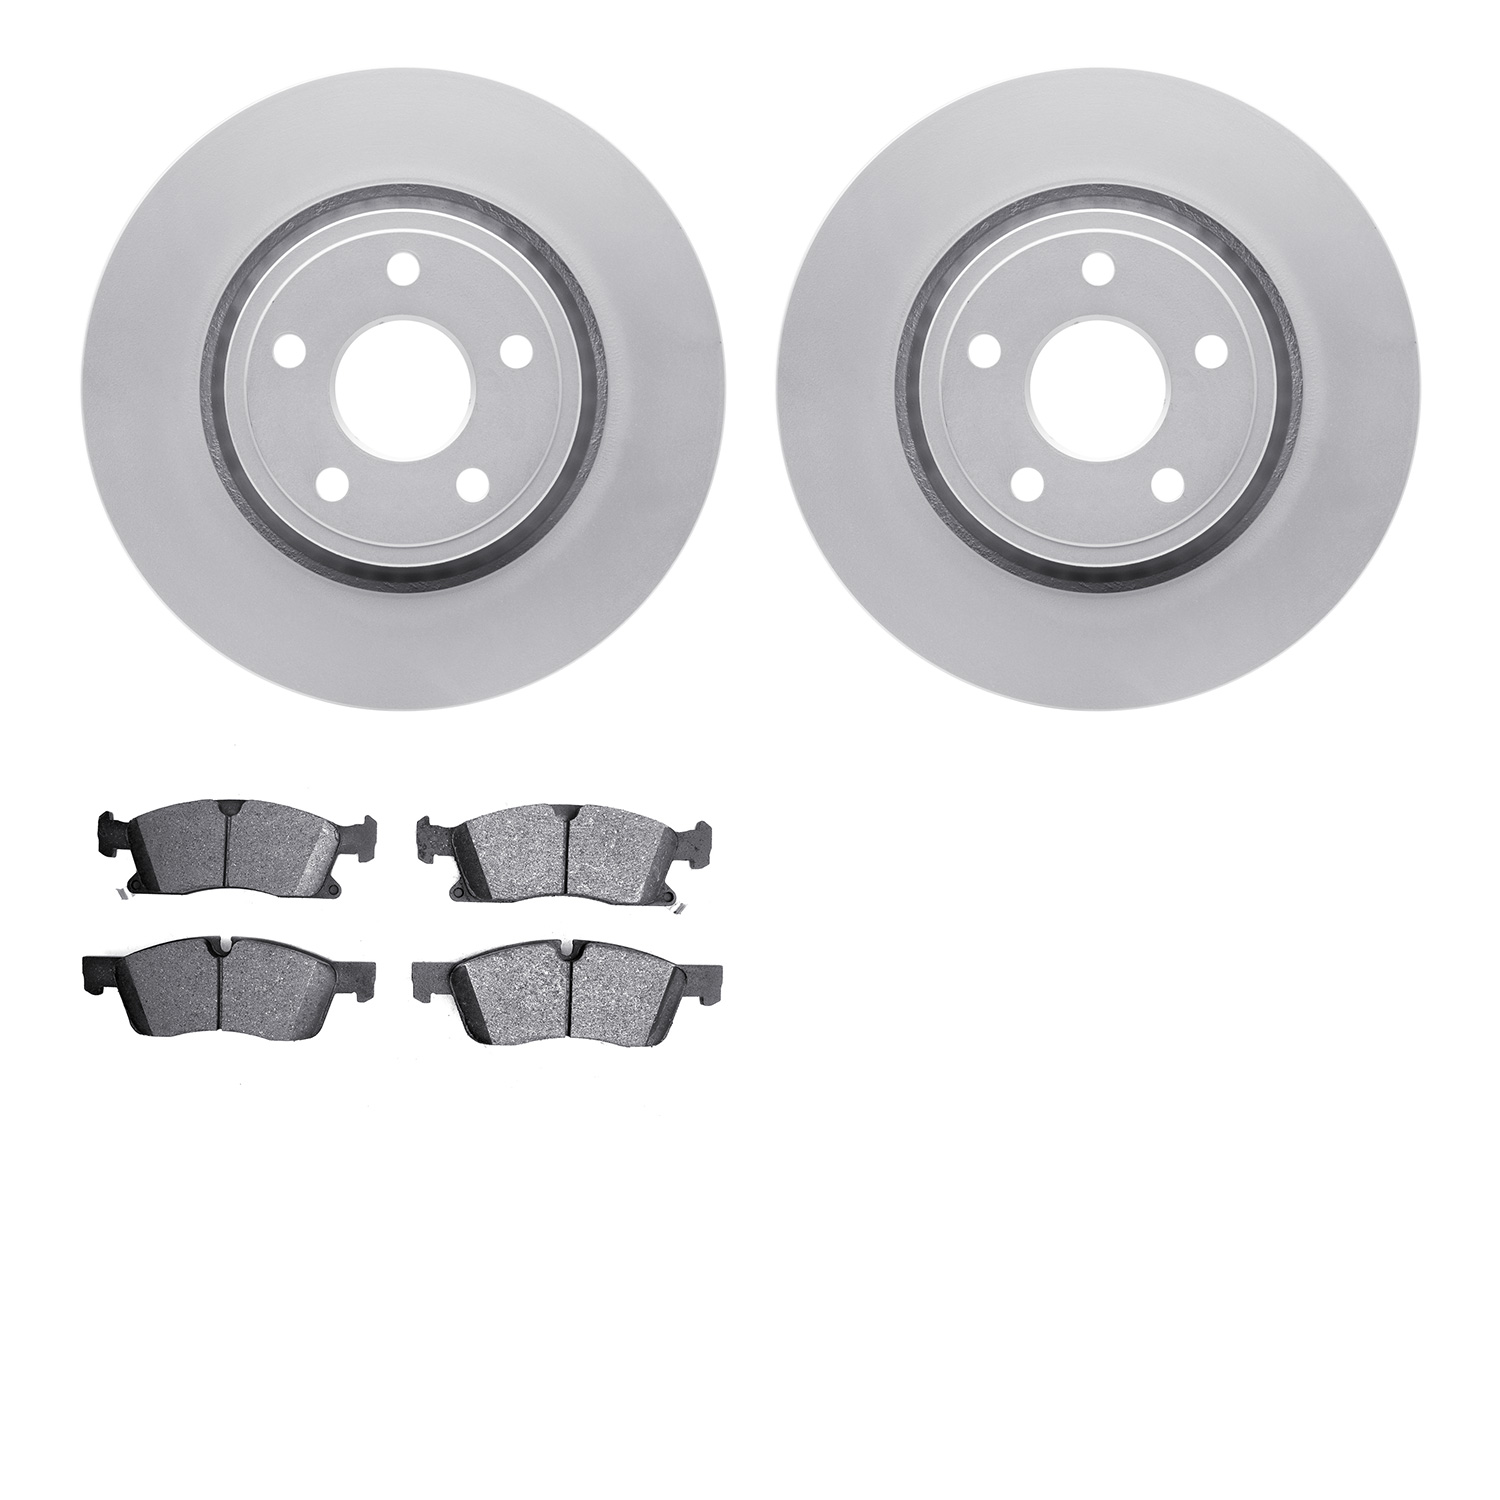 4402-42009 Geospec Brake Rotors with Ultimate-Duty Brake Pads Kit, Fits Select Mopar, Position: Front